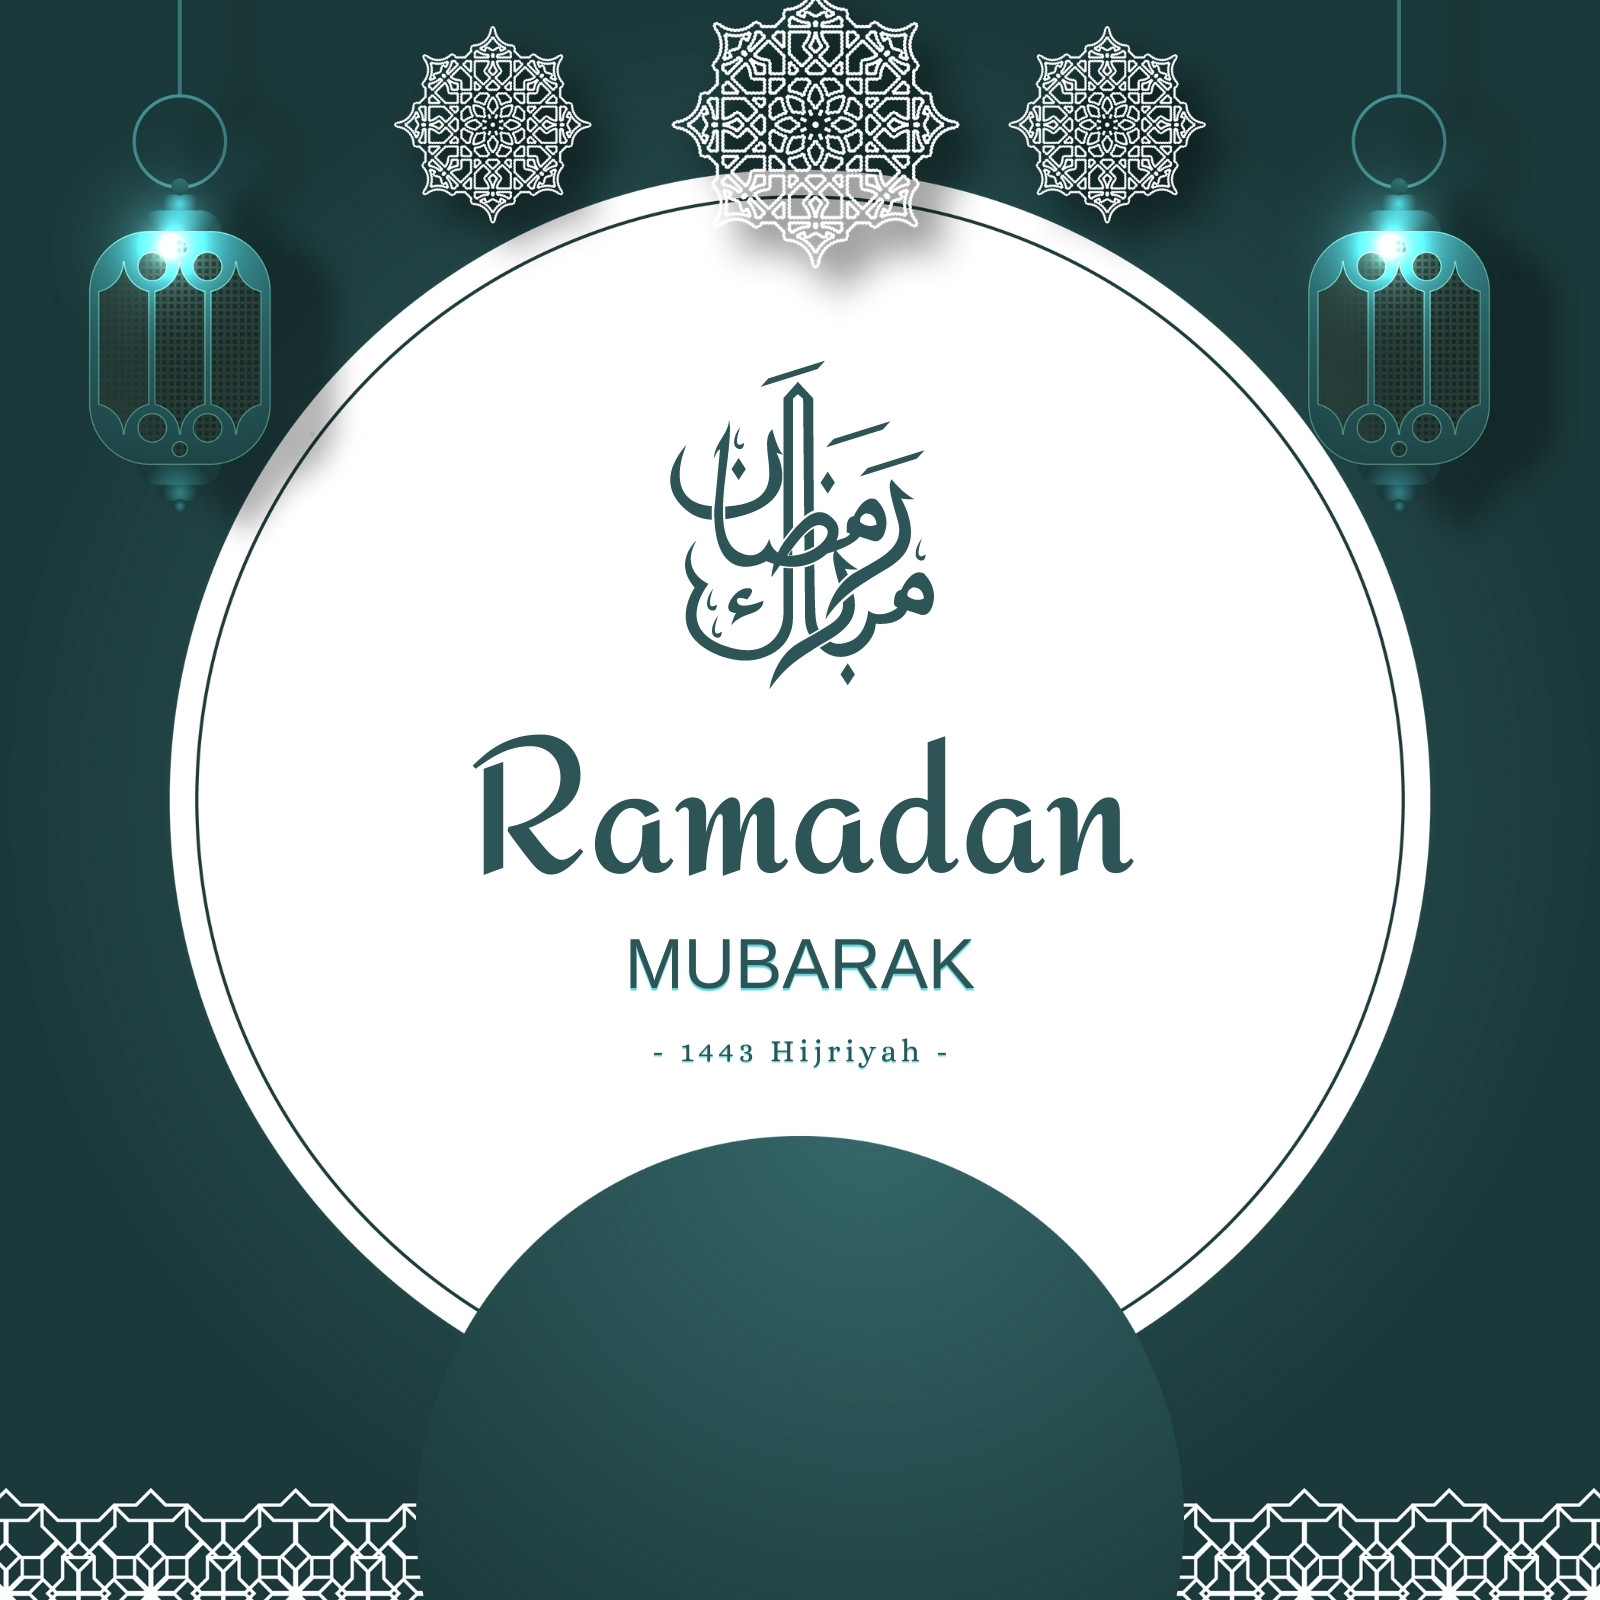 Quran Ramadan Kareem Vector Design Images, Ramadan Kareem Background,  Confetti, Ramadan Mubarak, Mosque PNG Image For Free Download | Ramadan  wishes, Ramadan, Islam ramadan